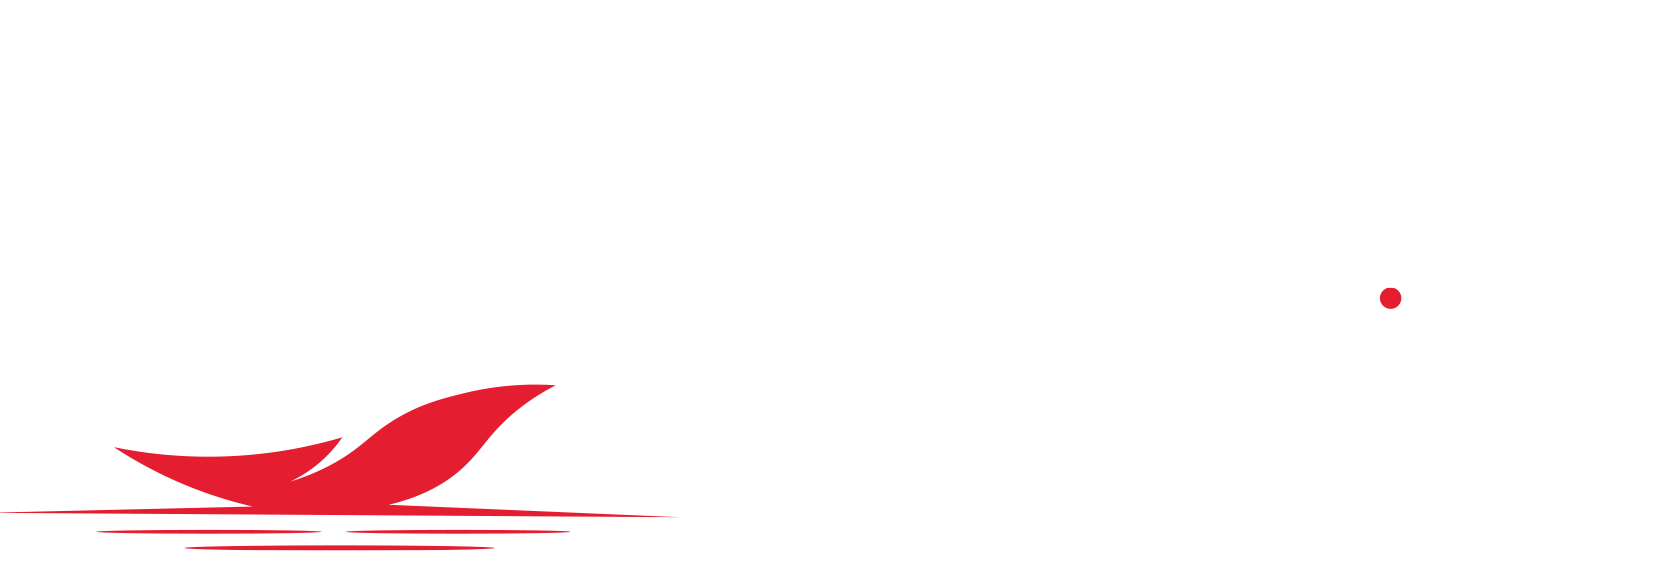 Donswift